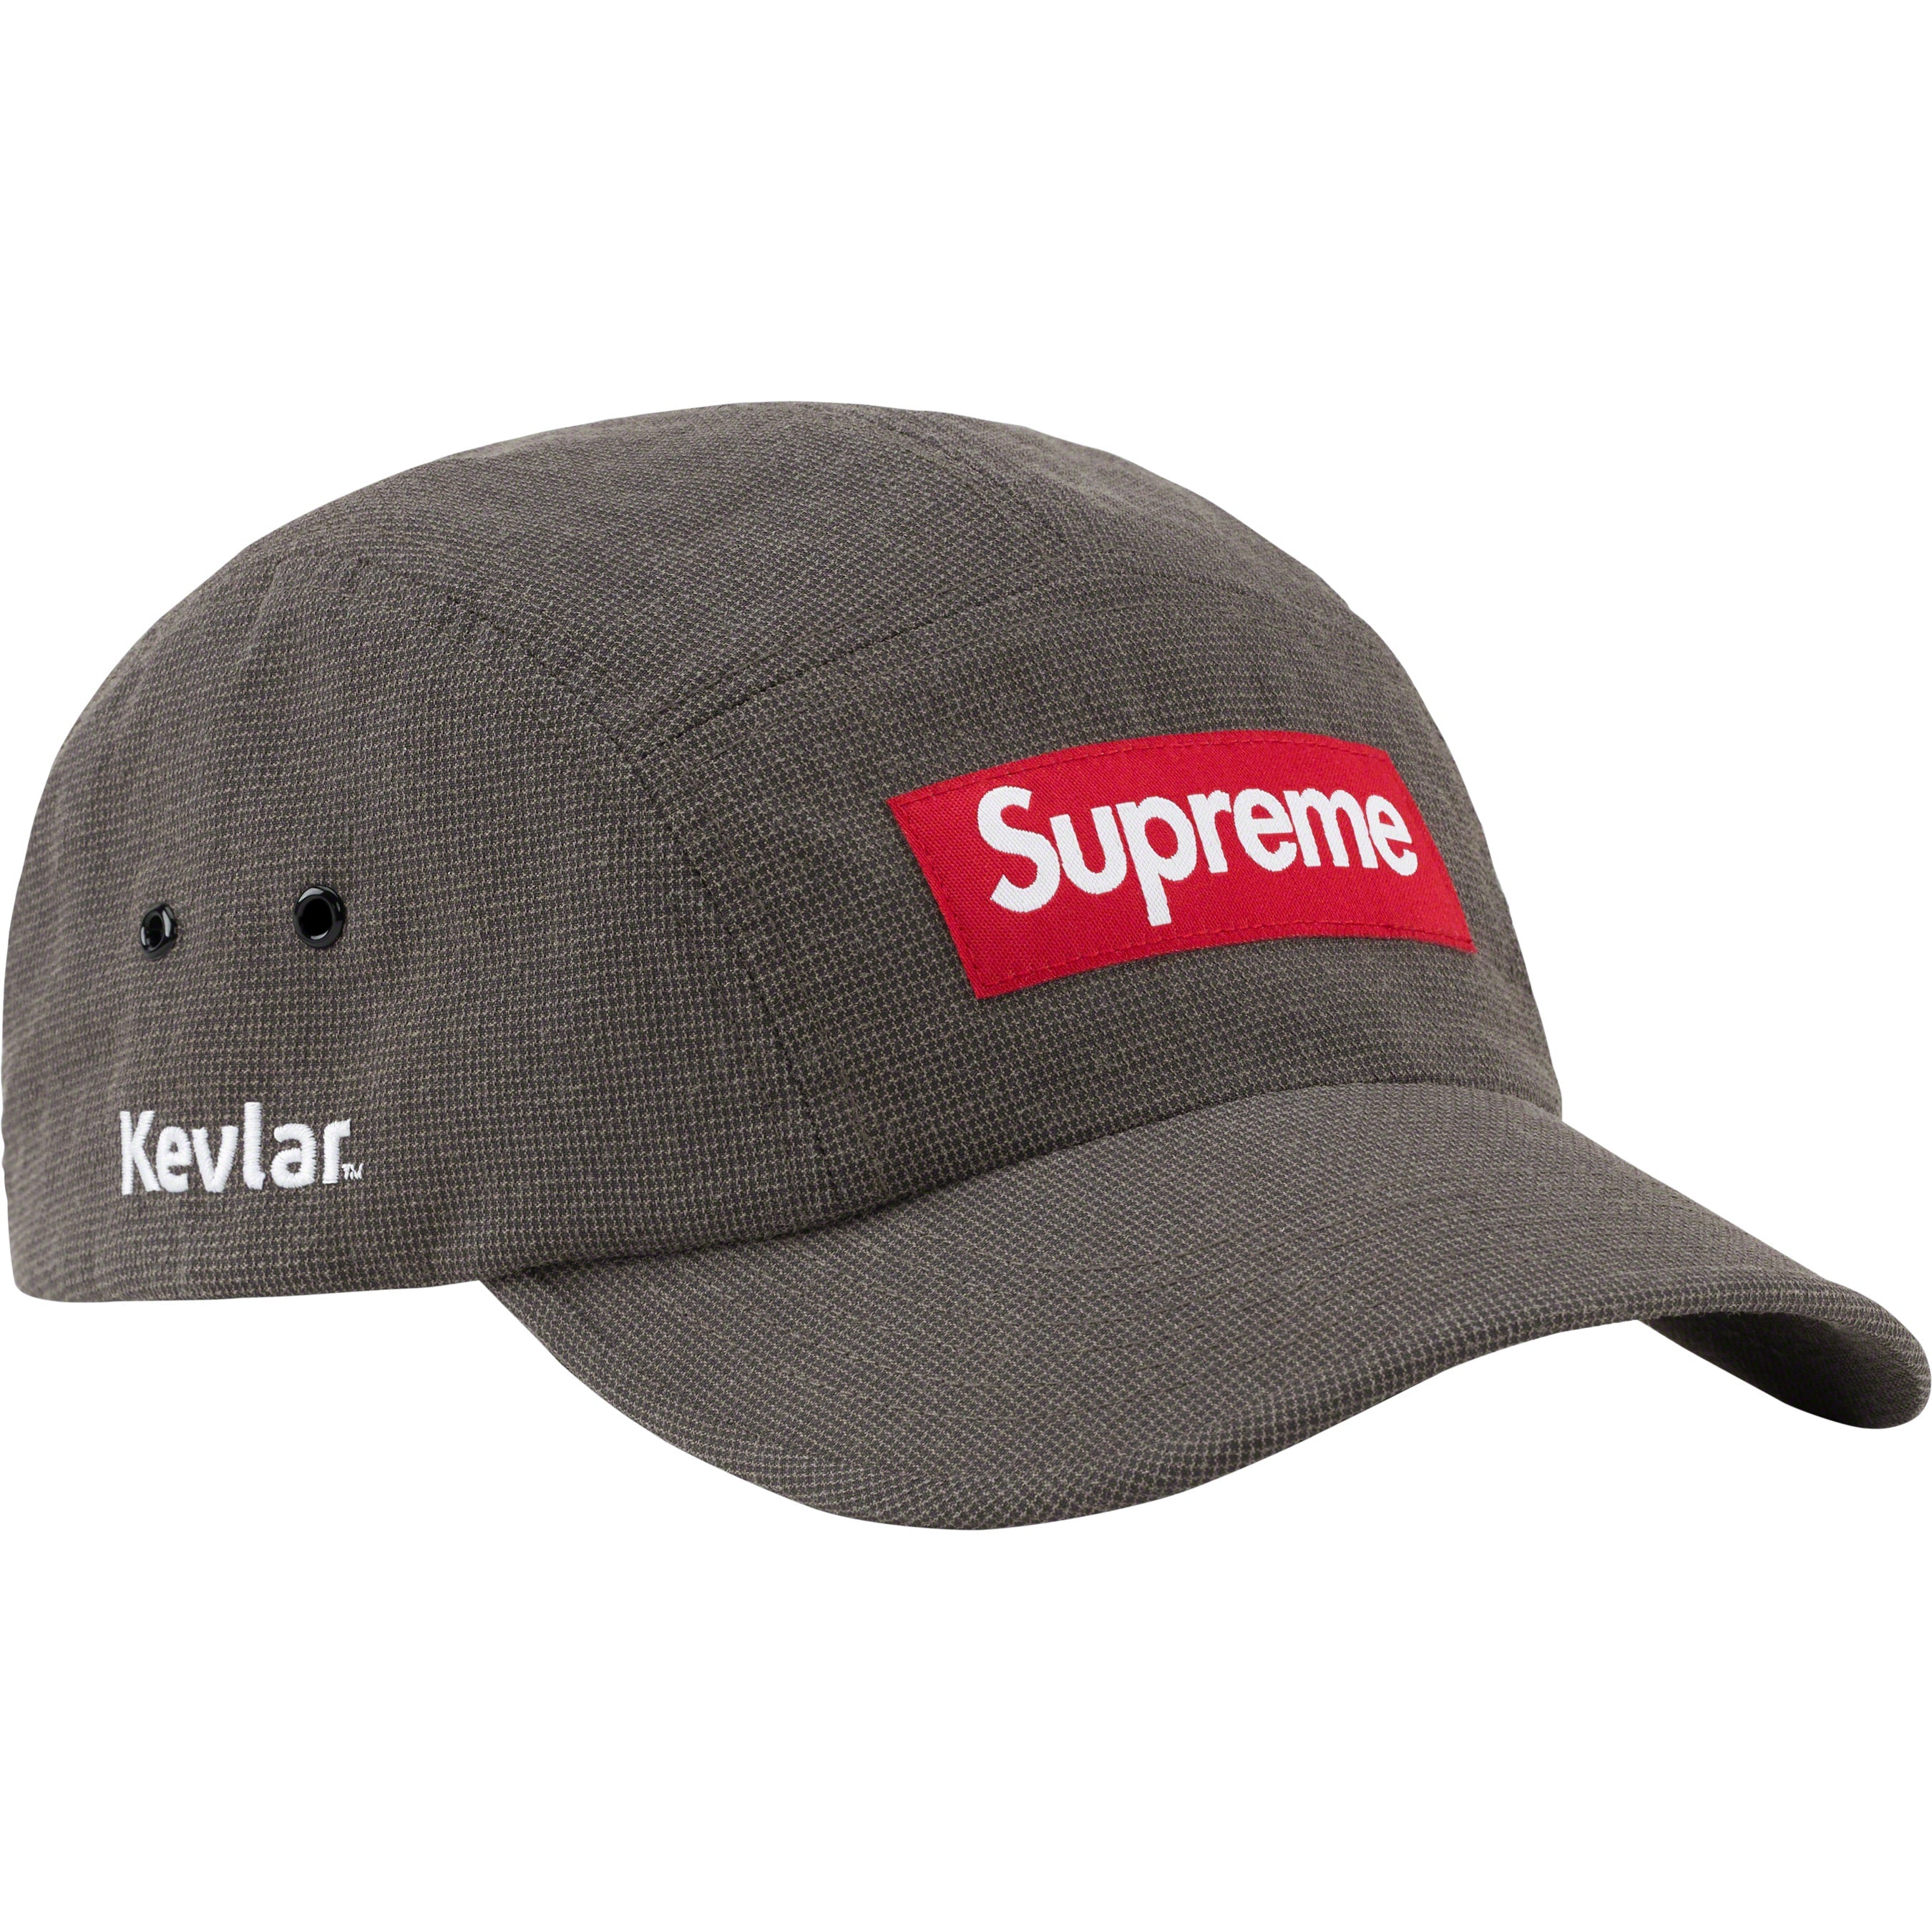 supreme cap price